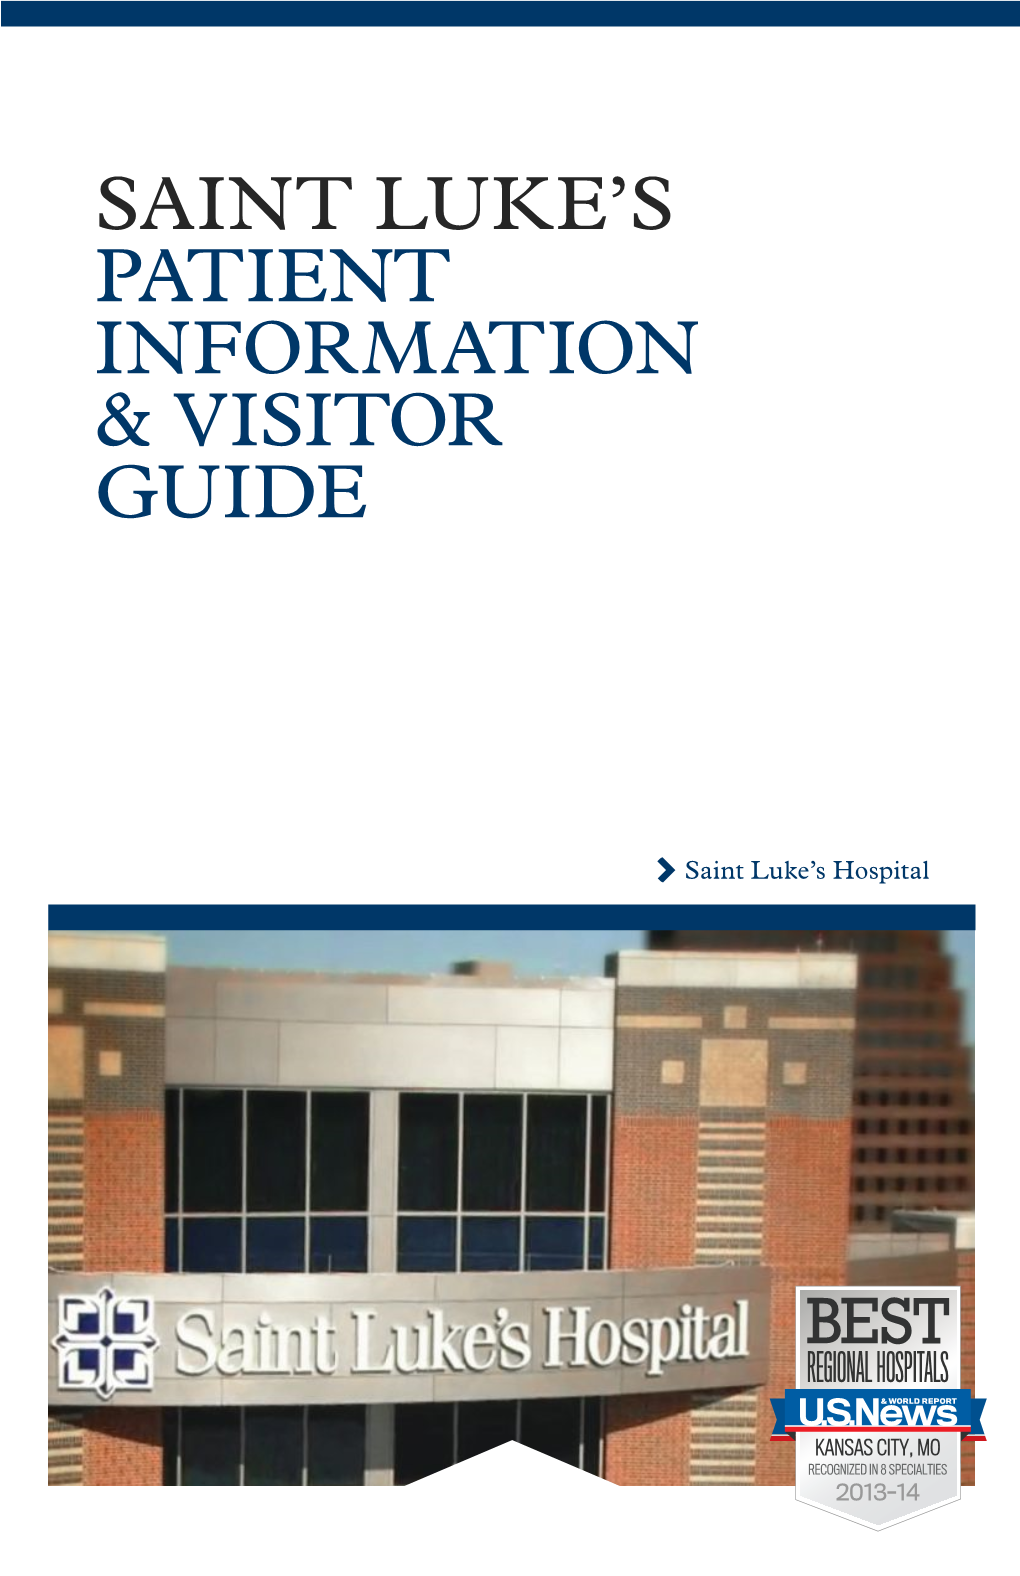 Saint Luke's Patient Information & Visitor Guide